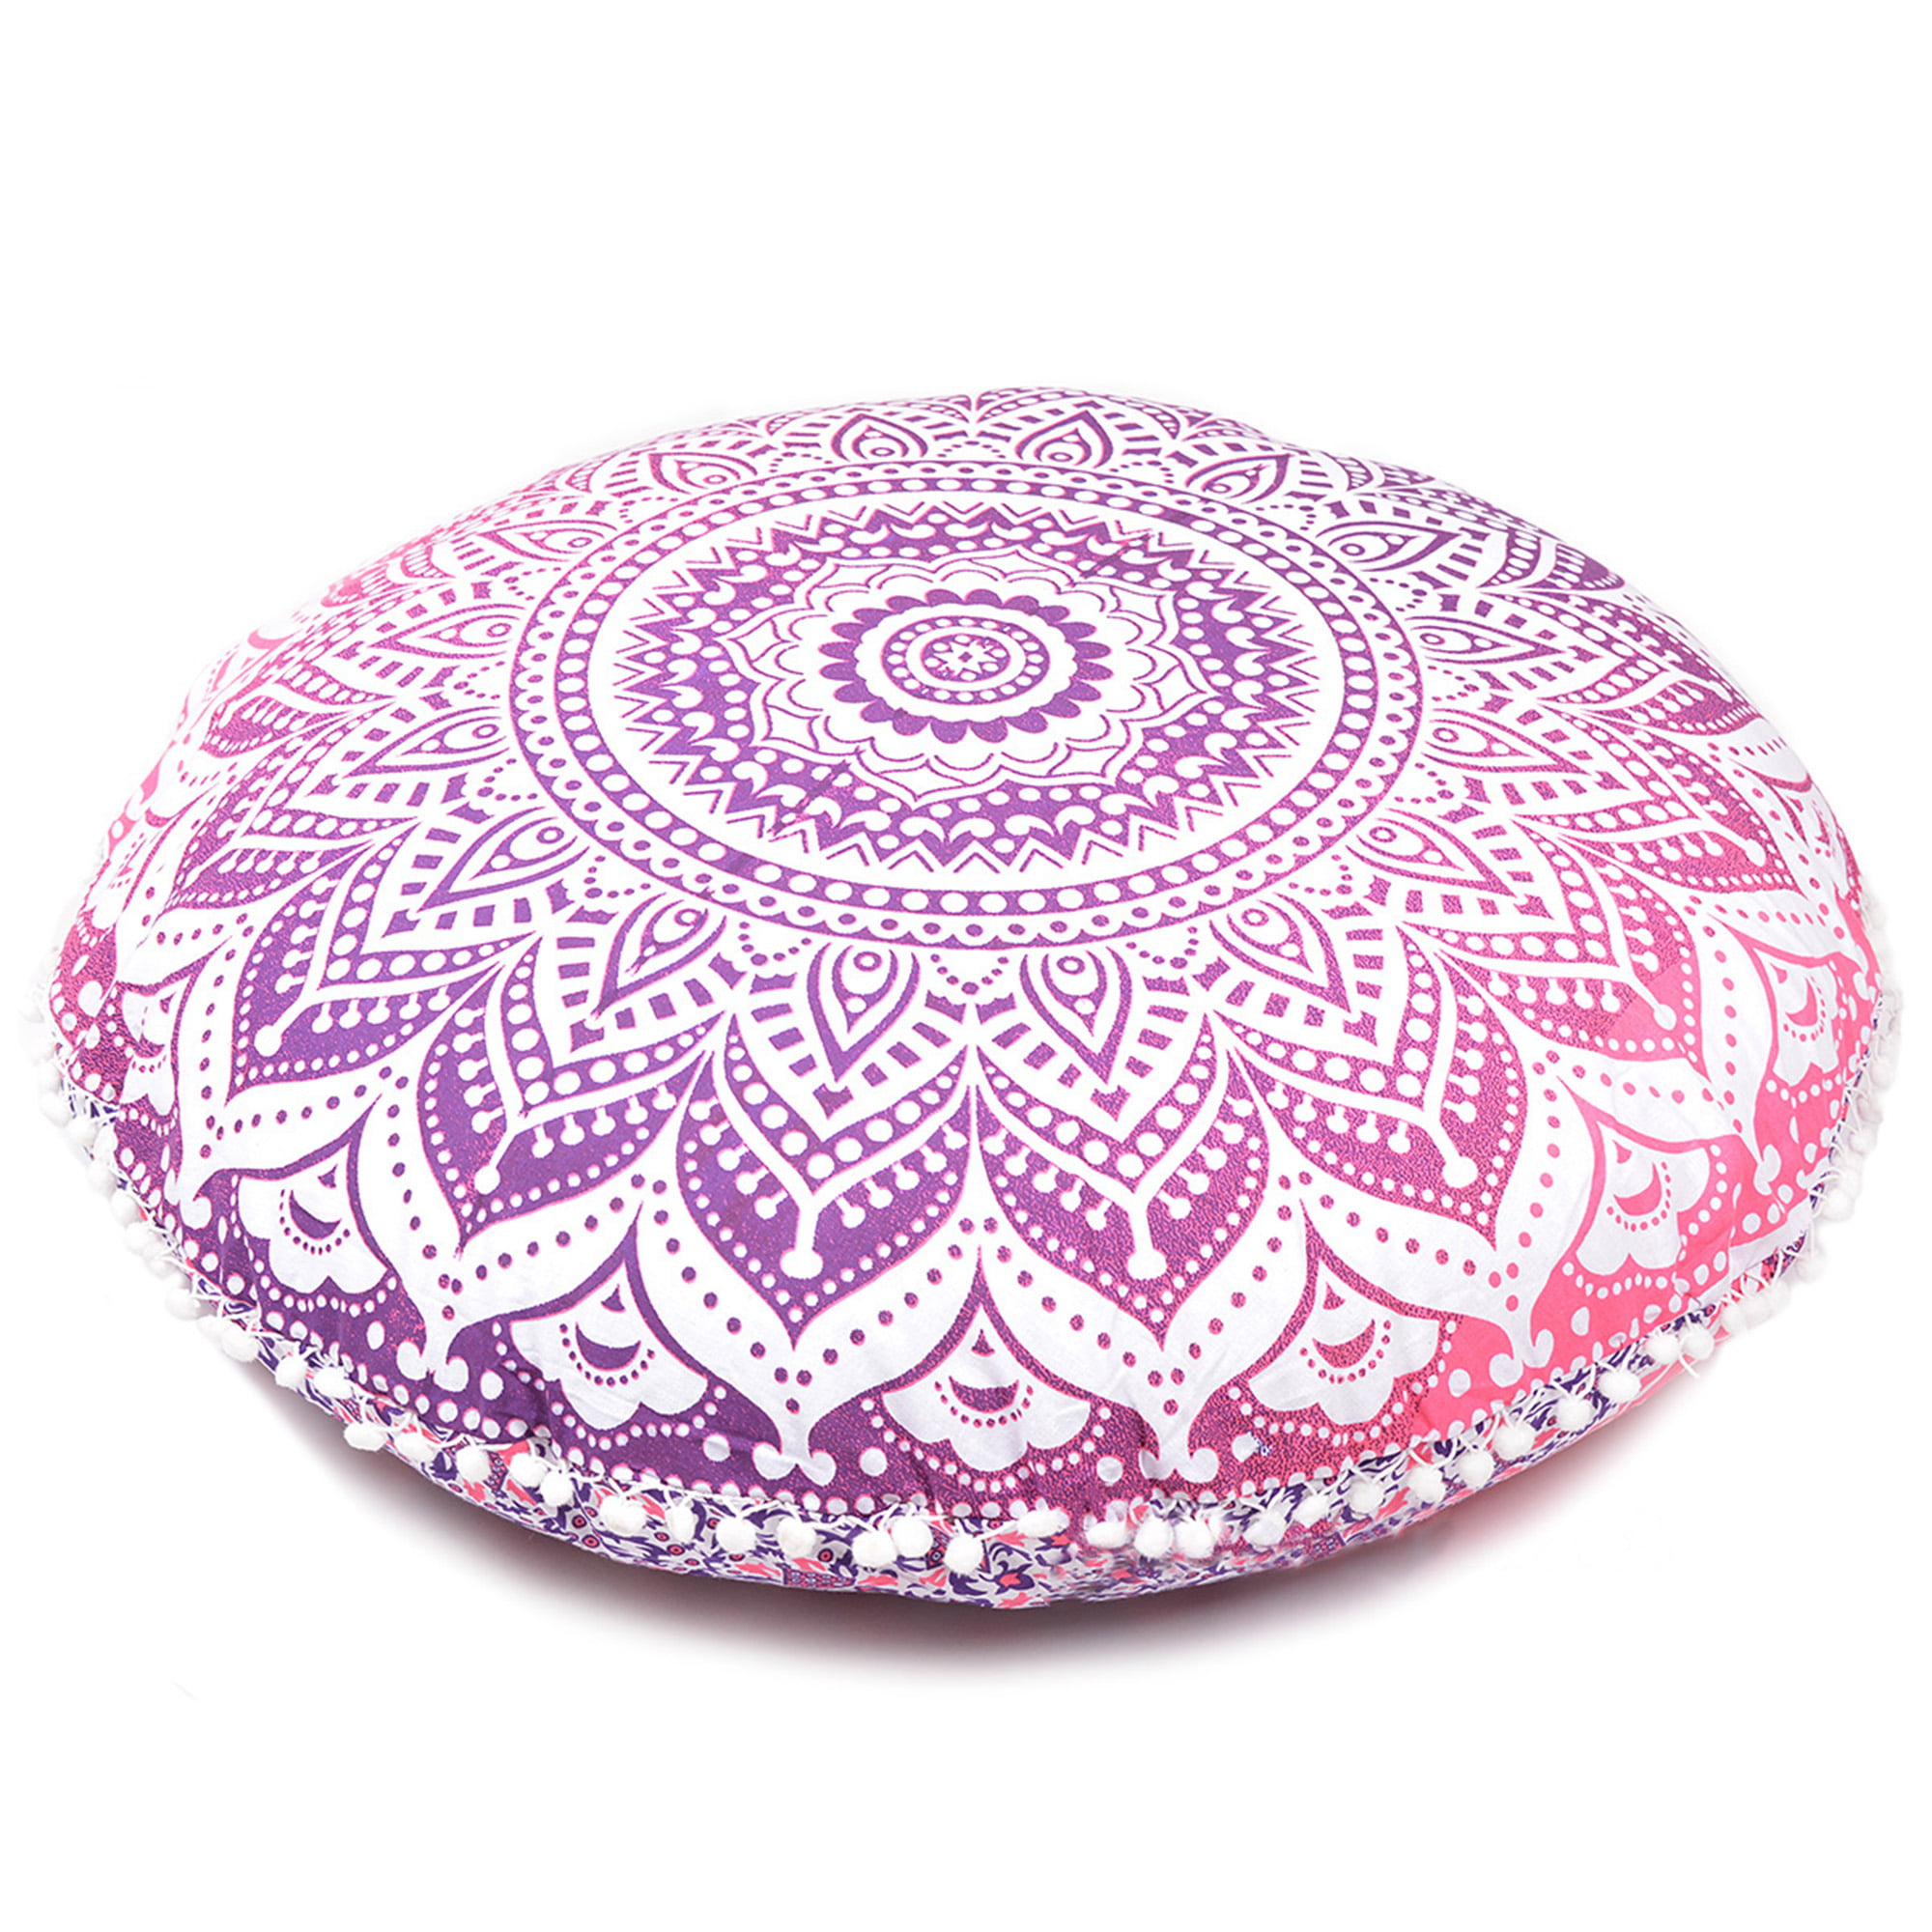 New Indian Handmade 32'' Round White Black Floral Mandala Cushion Cover Floor Decorative Covers Maditation Cushion Cover